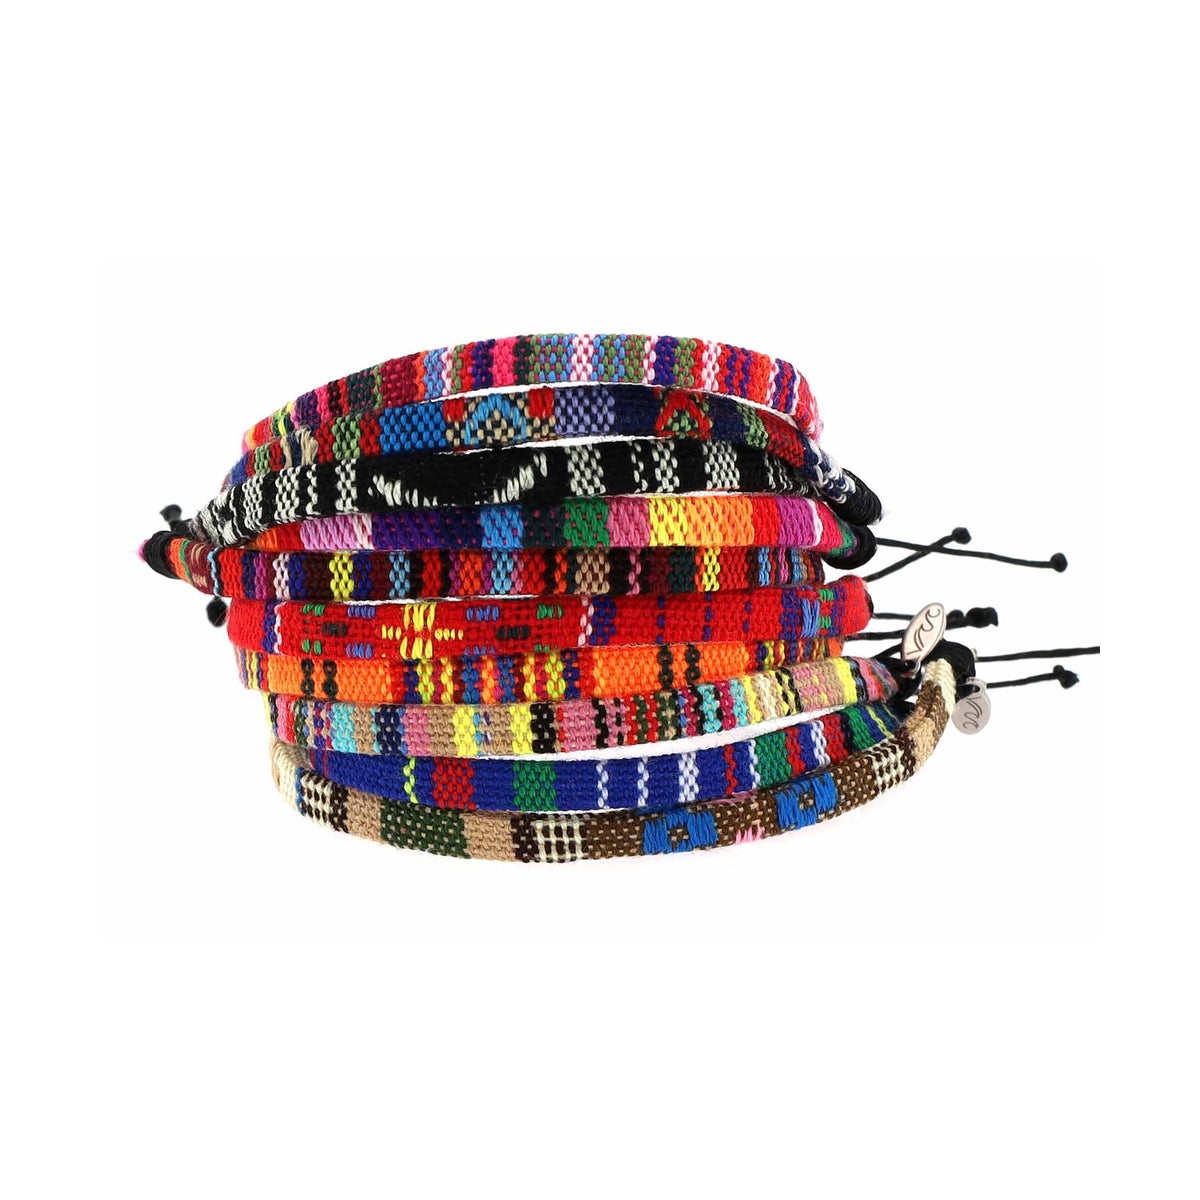 Virtu Made Bracelets 100 Assortment